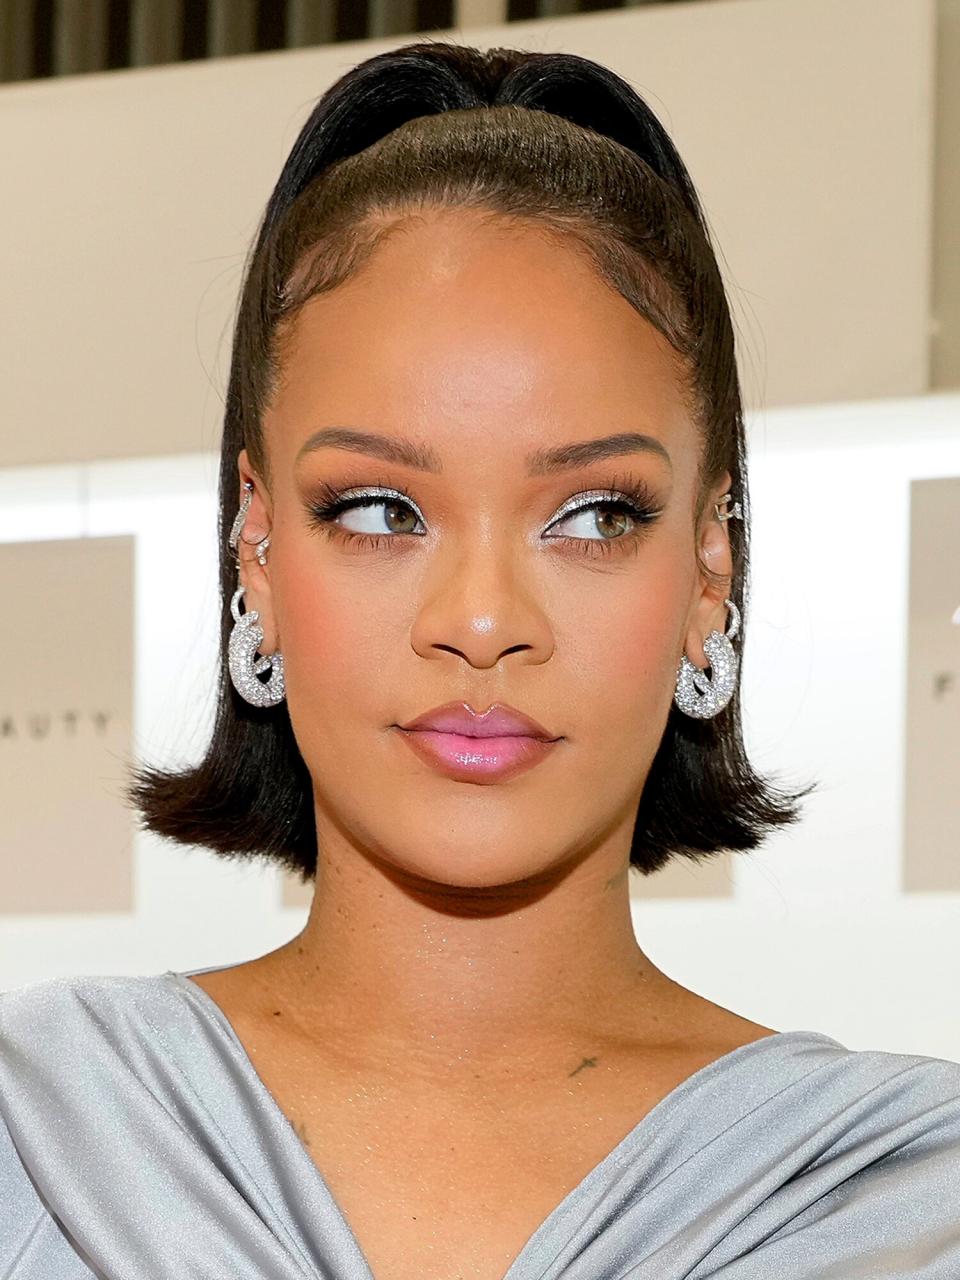 Rihanna celebrates the launch of Fenty Beauty at ULTA Beauty on March 12, 2022 in Los Angeles, California